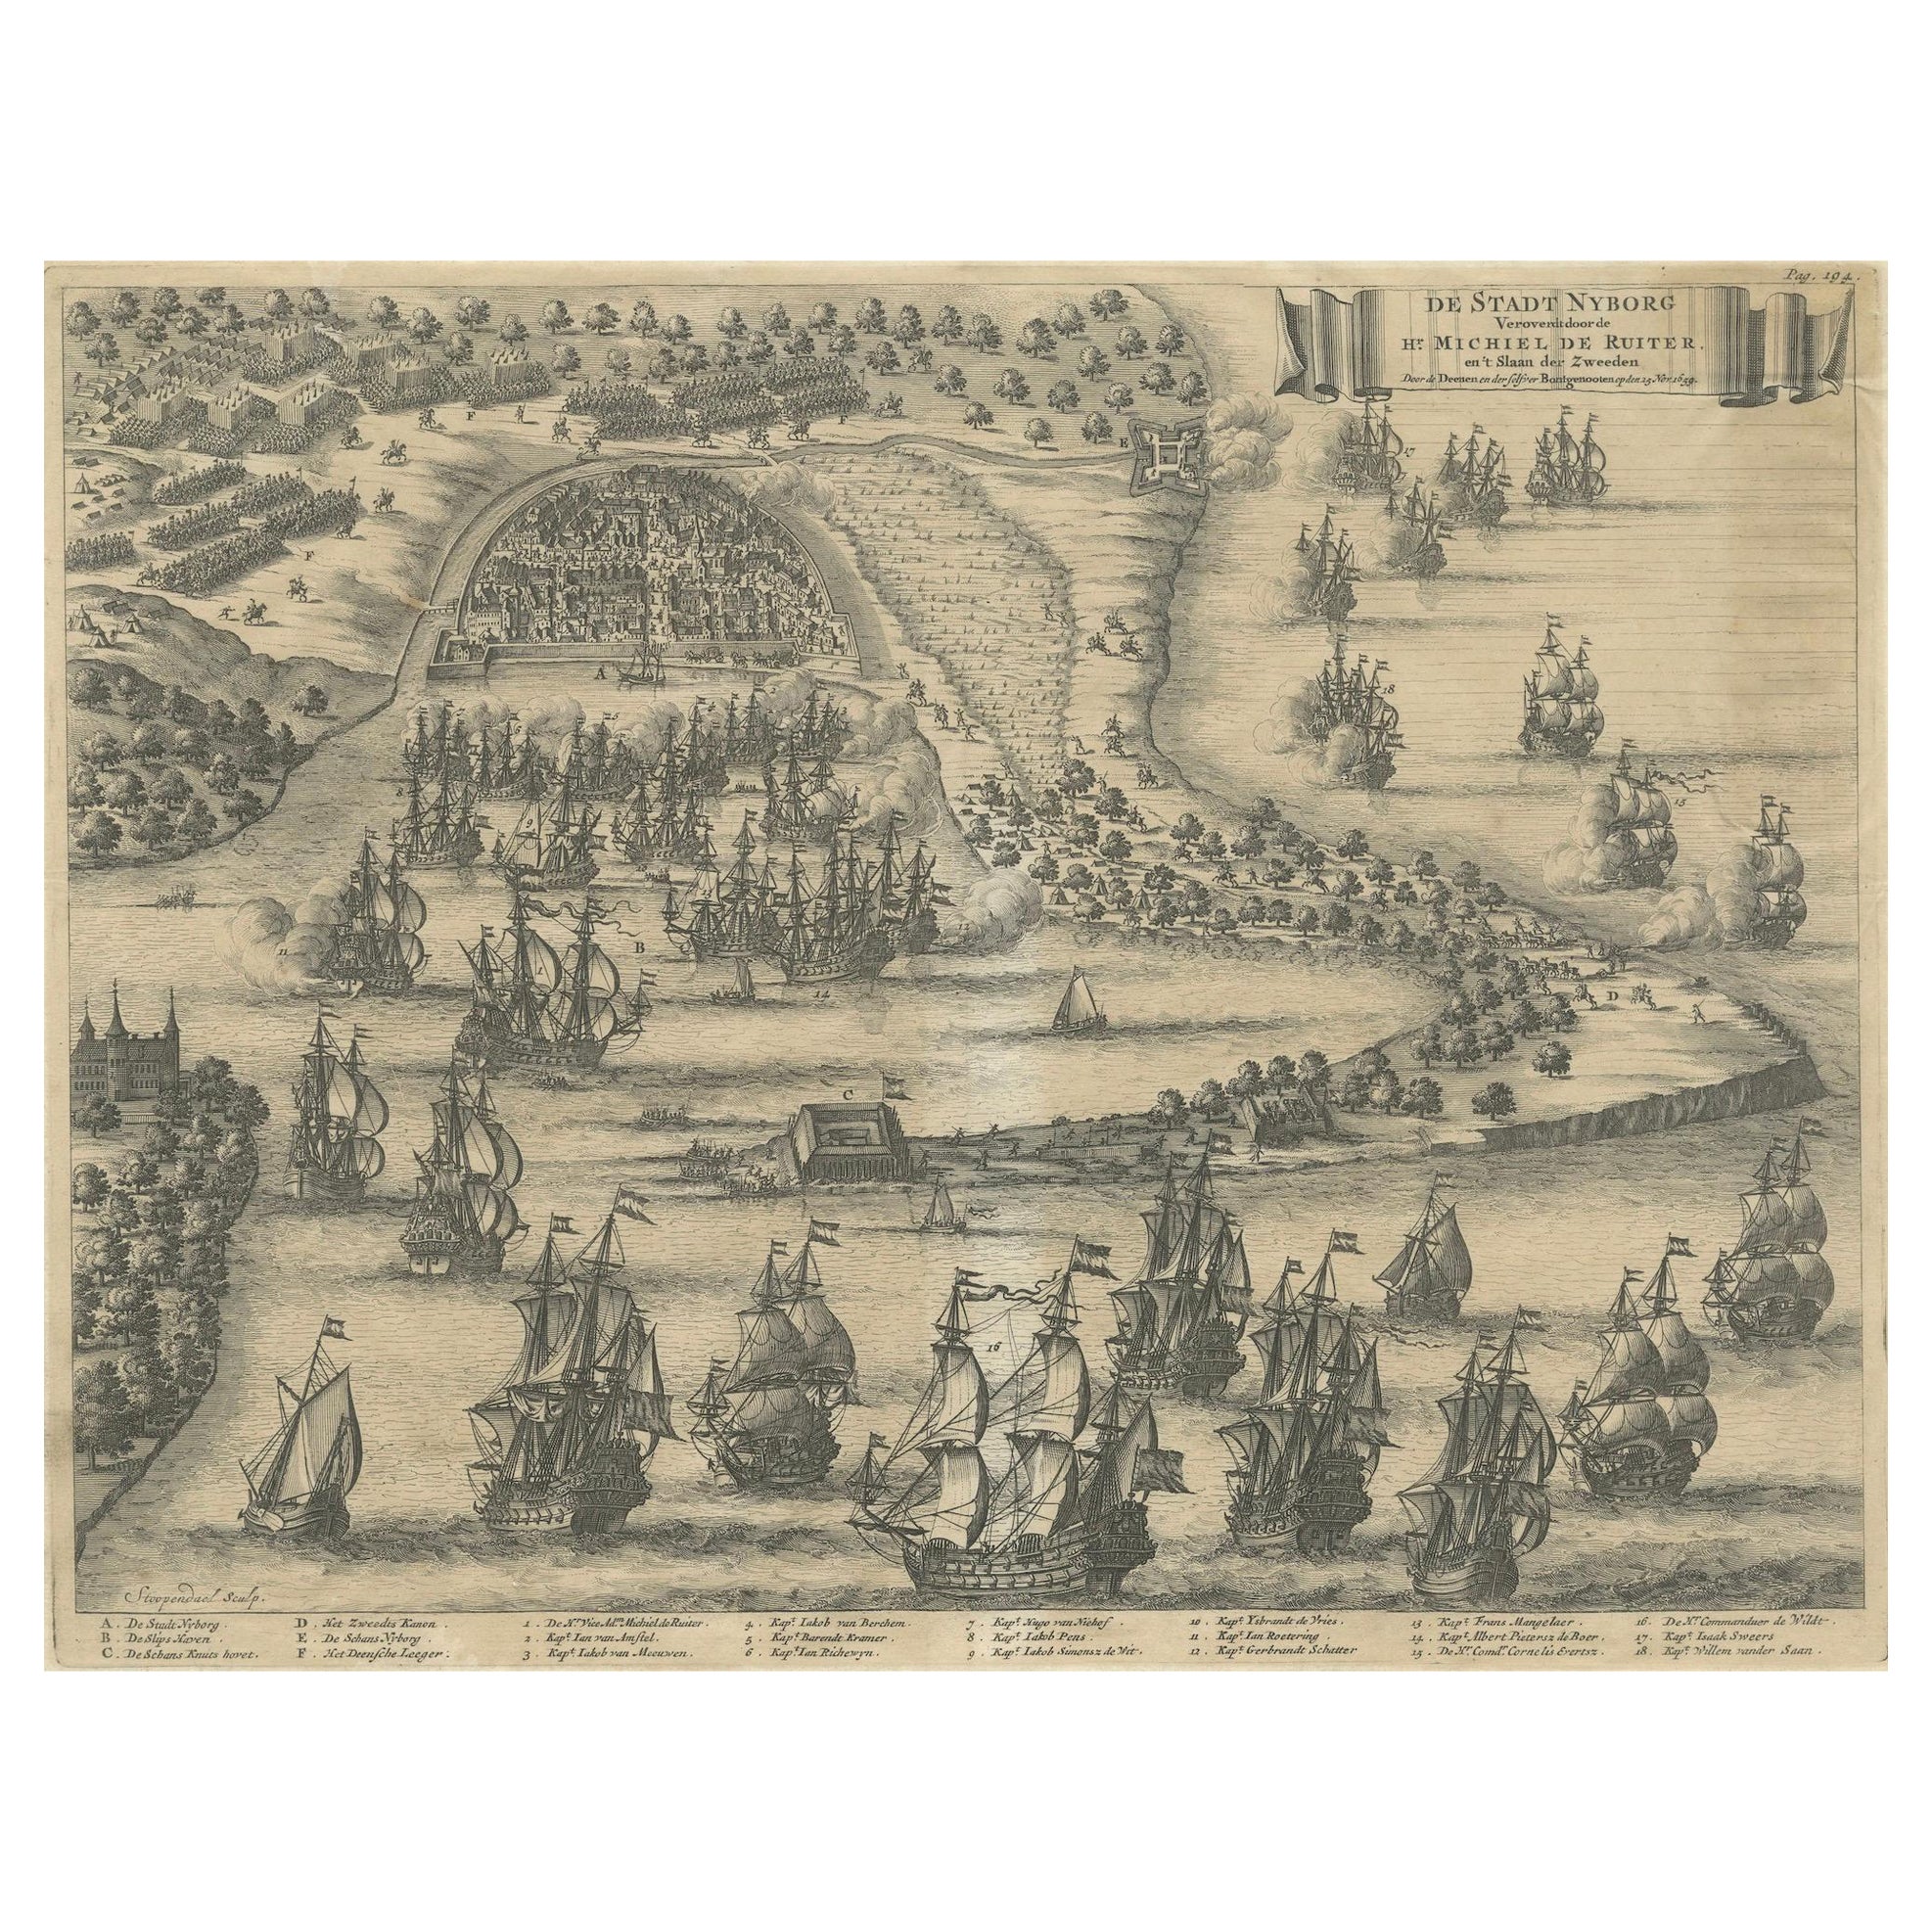 The Siege of Nyborg, 1659: A Strategic Battle of the Dano-Swedish War, 1746 For Sale